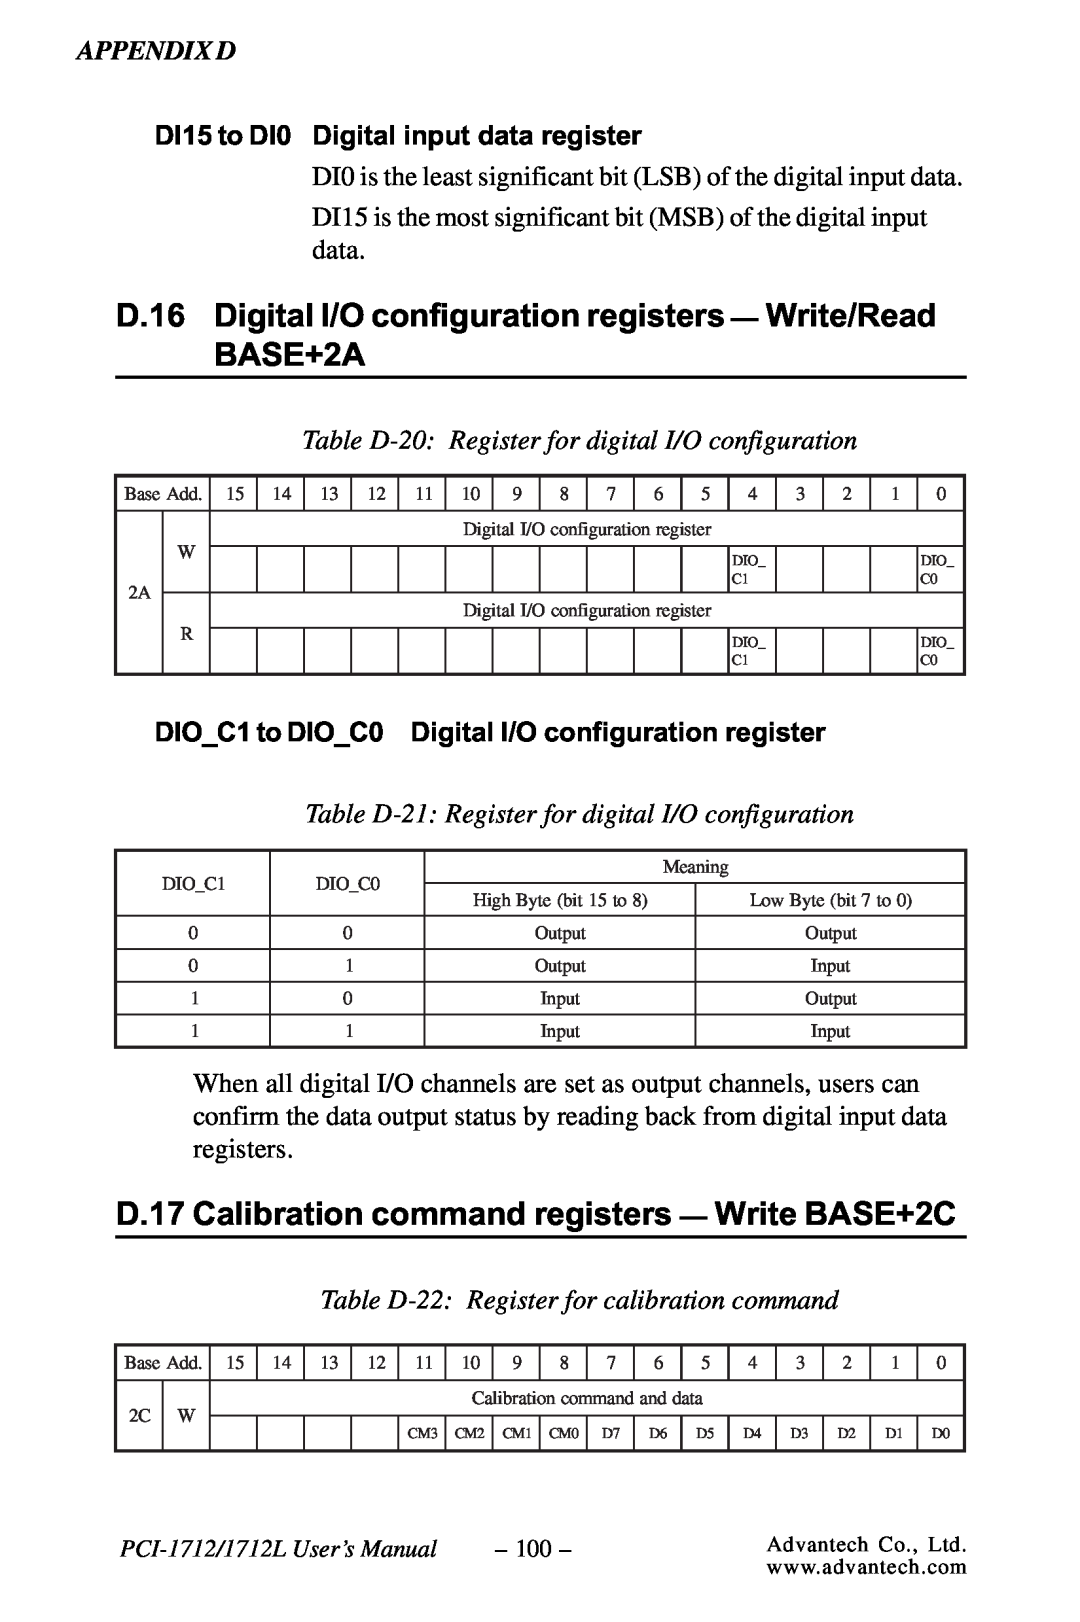 Konica Minolta PCI-1712L D.16 Digital I/O configuration registers - Write/Read BASE+2A, PCI-1712/1712L User’s Manual 